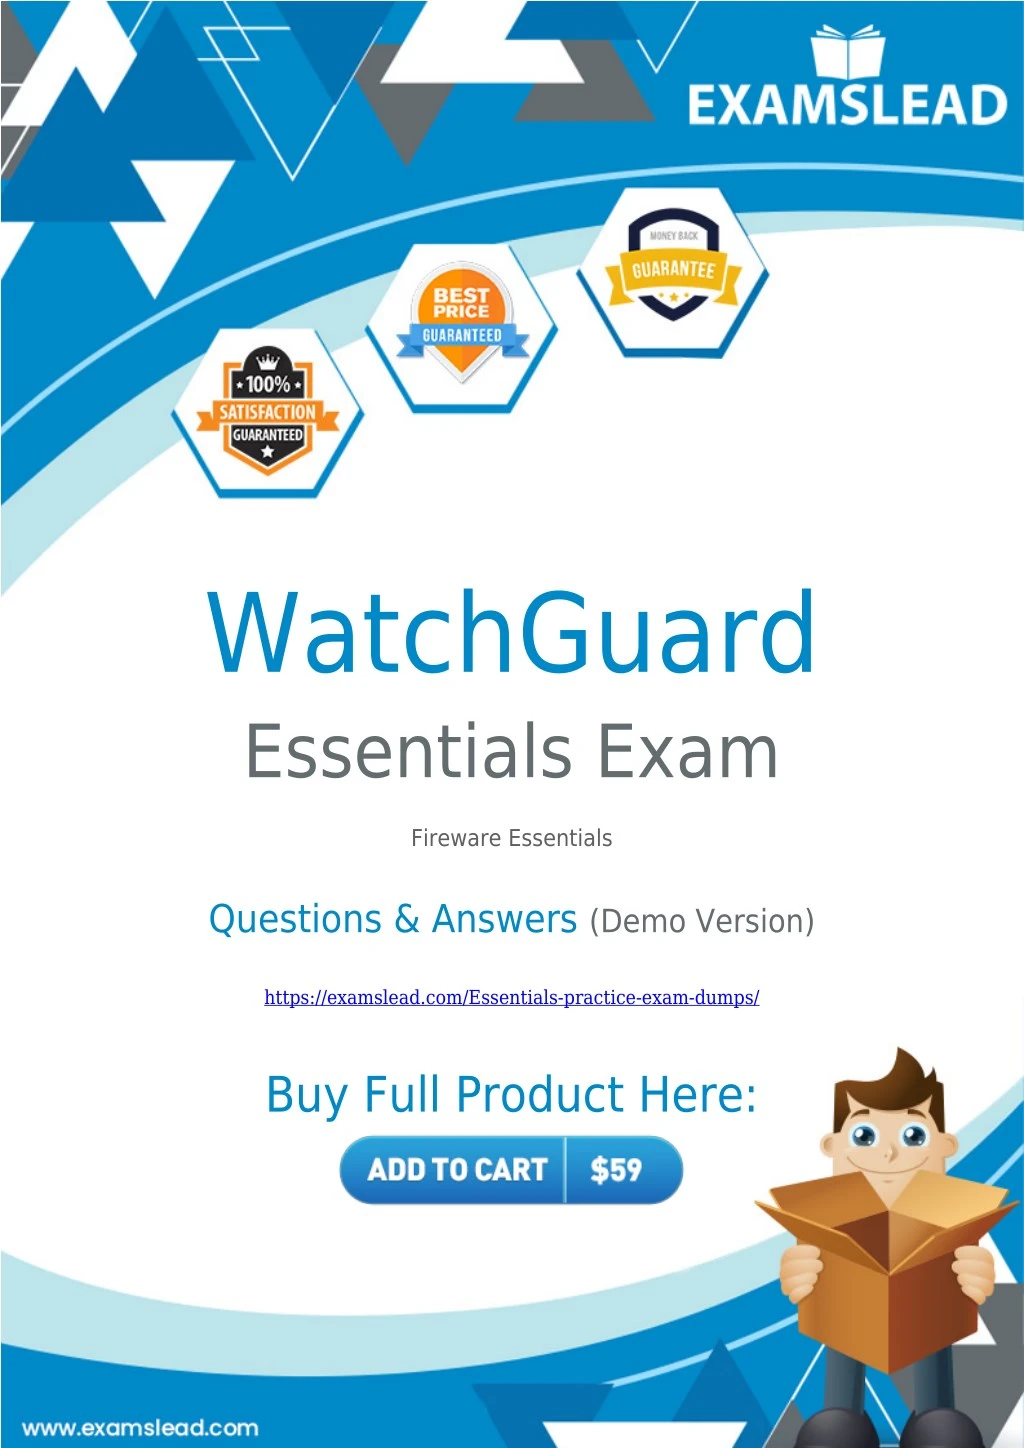 watchguard essentials exam